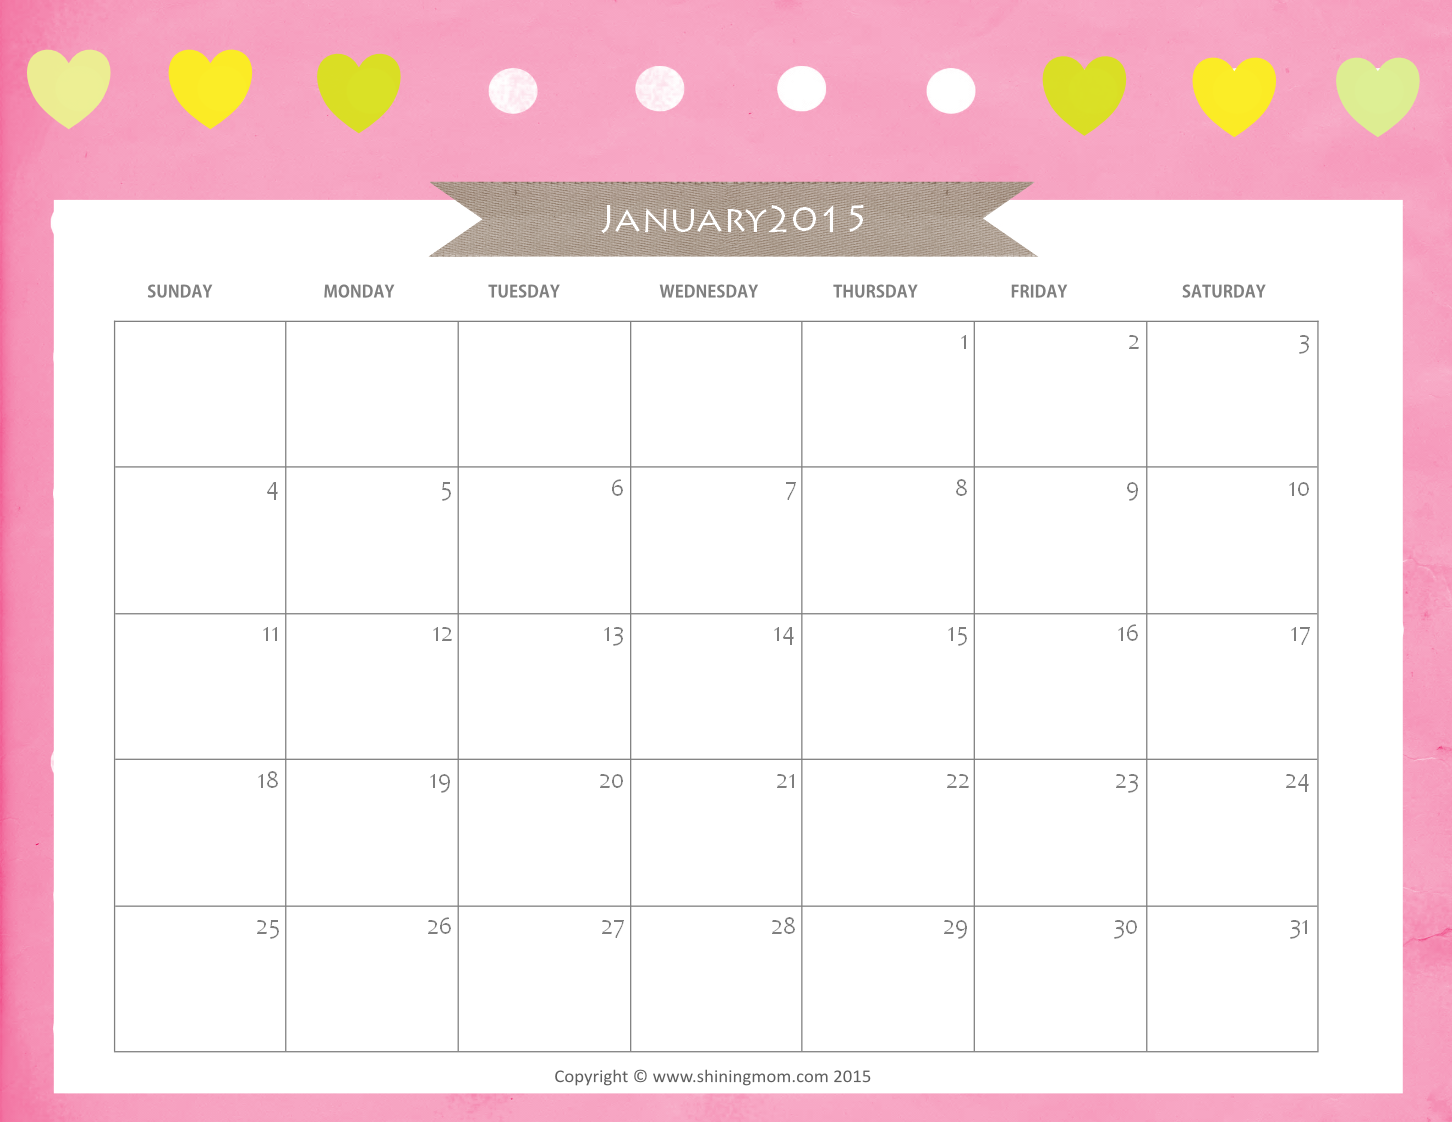 January 2015 Calendar In Refreshing Greens